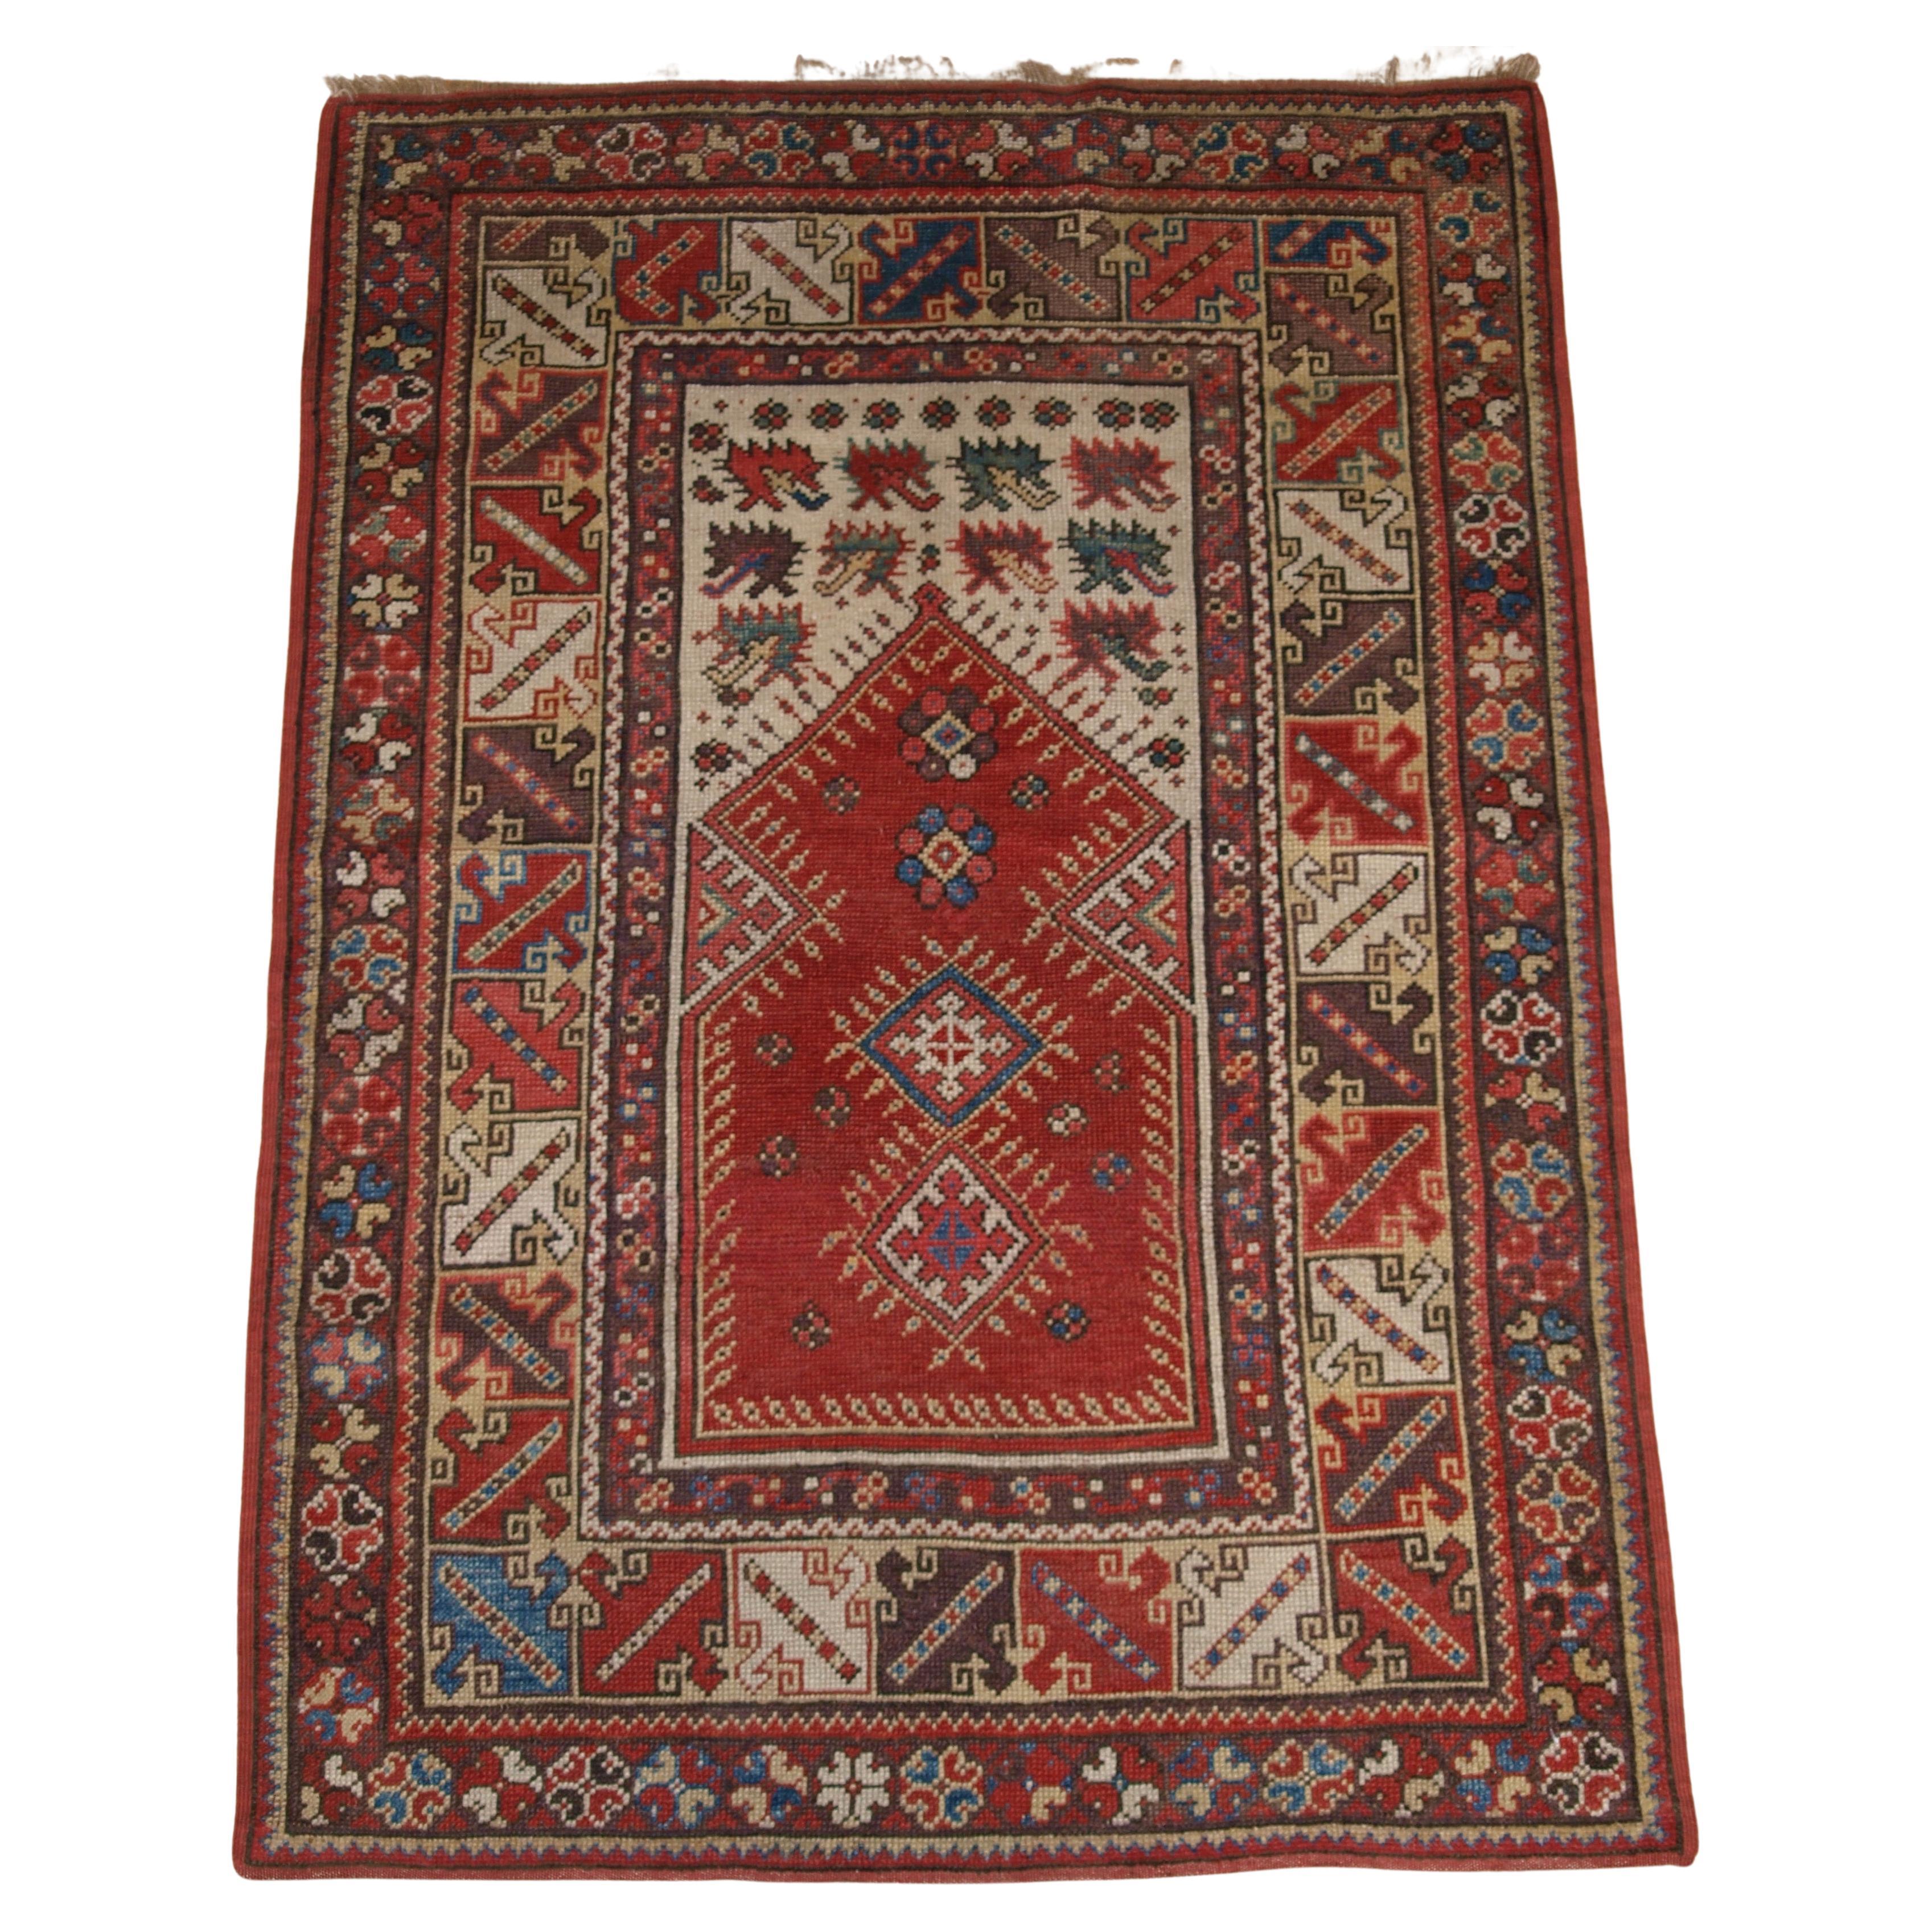 Antique Turkish Milas prayer rug of classic design with superb soft wool.